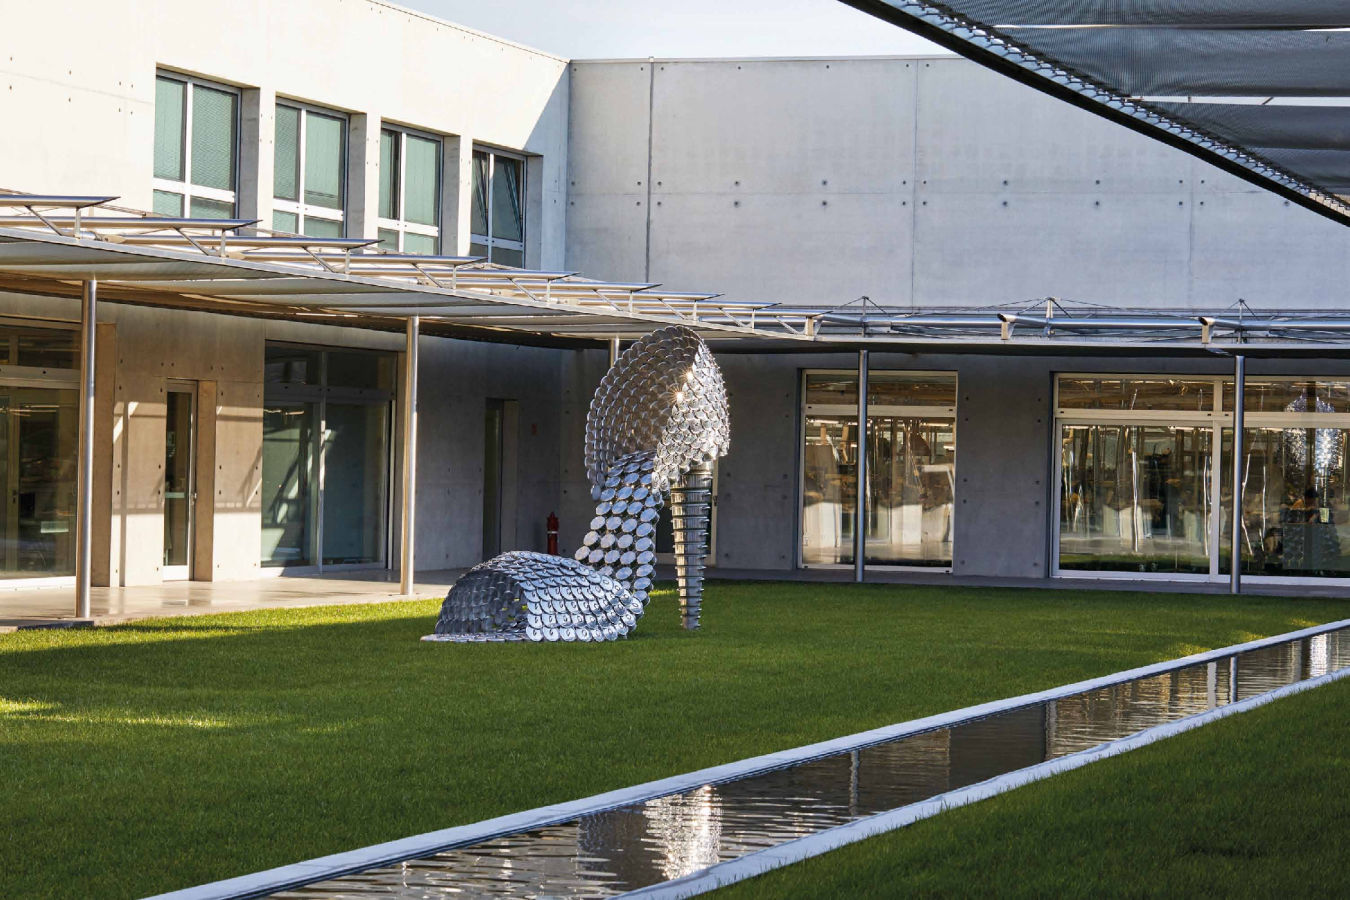 See Inside Louis Vuitton's Artisanal Shoe Factory